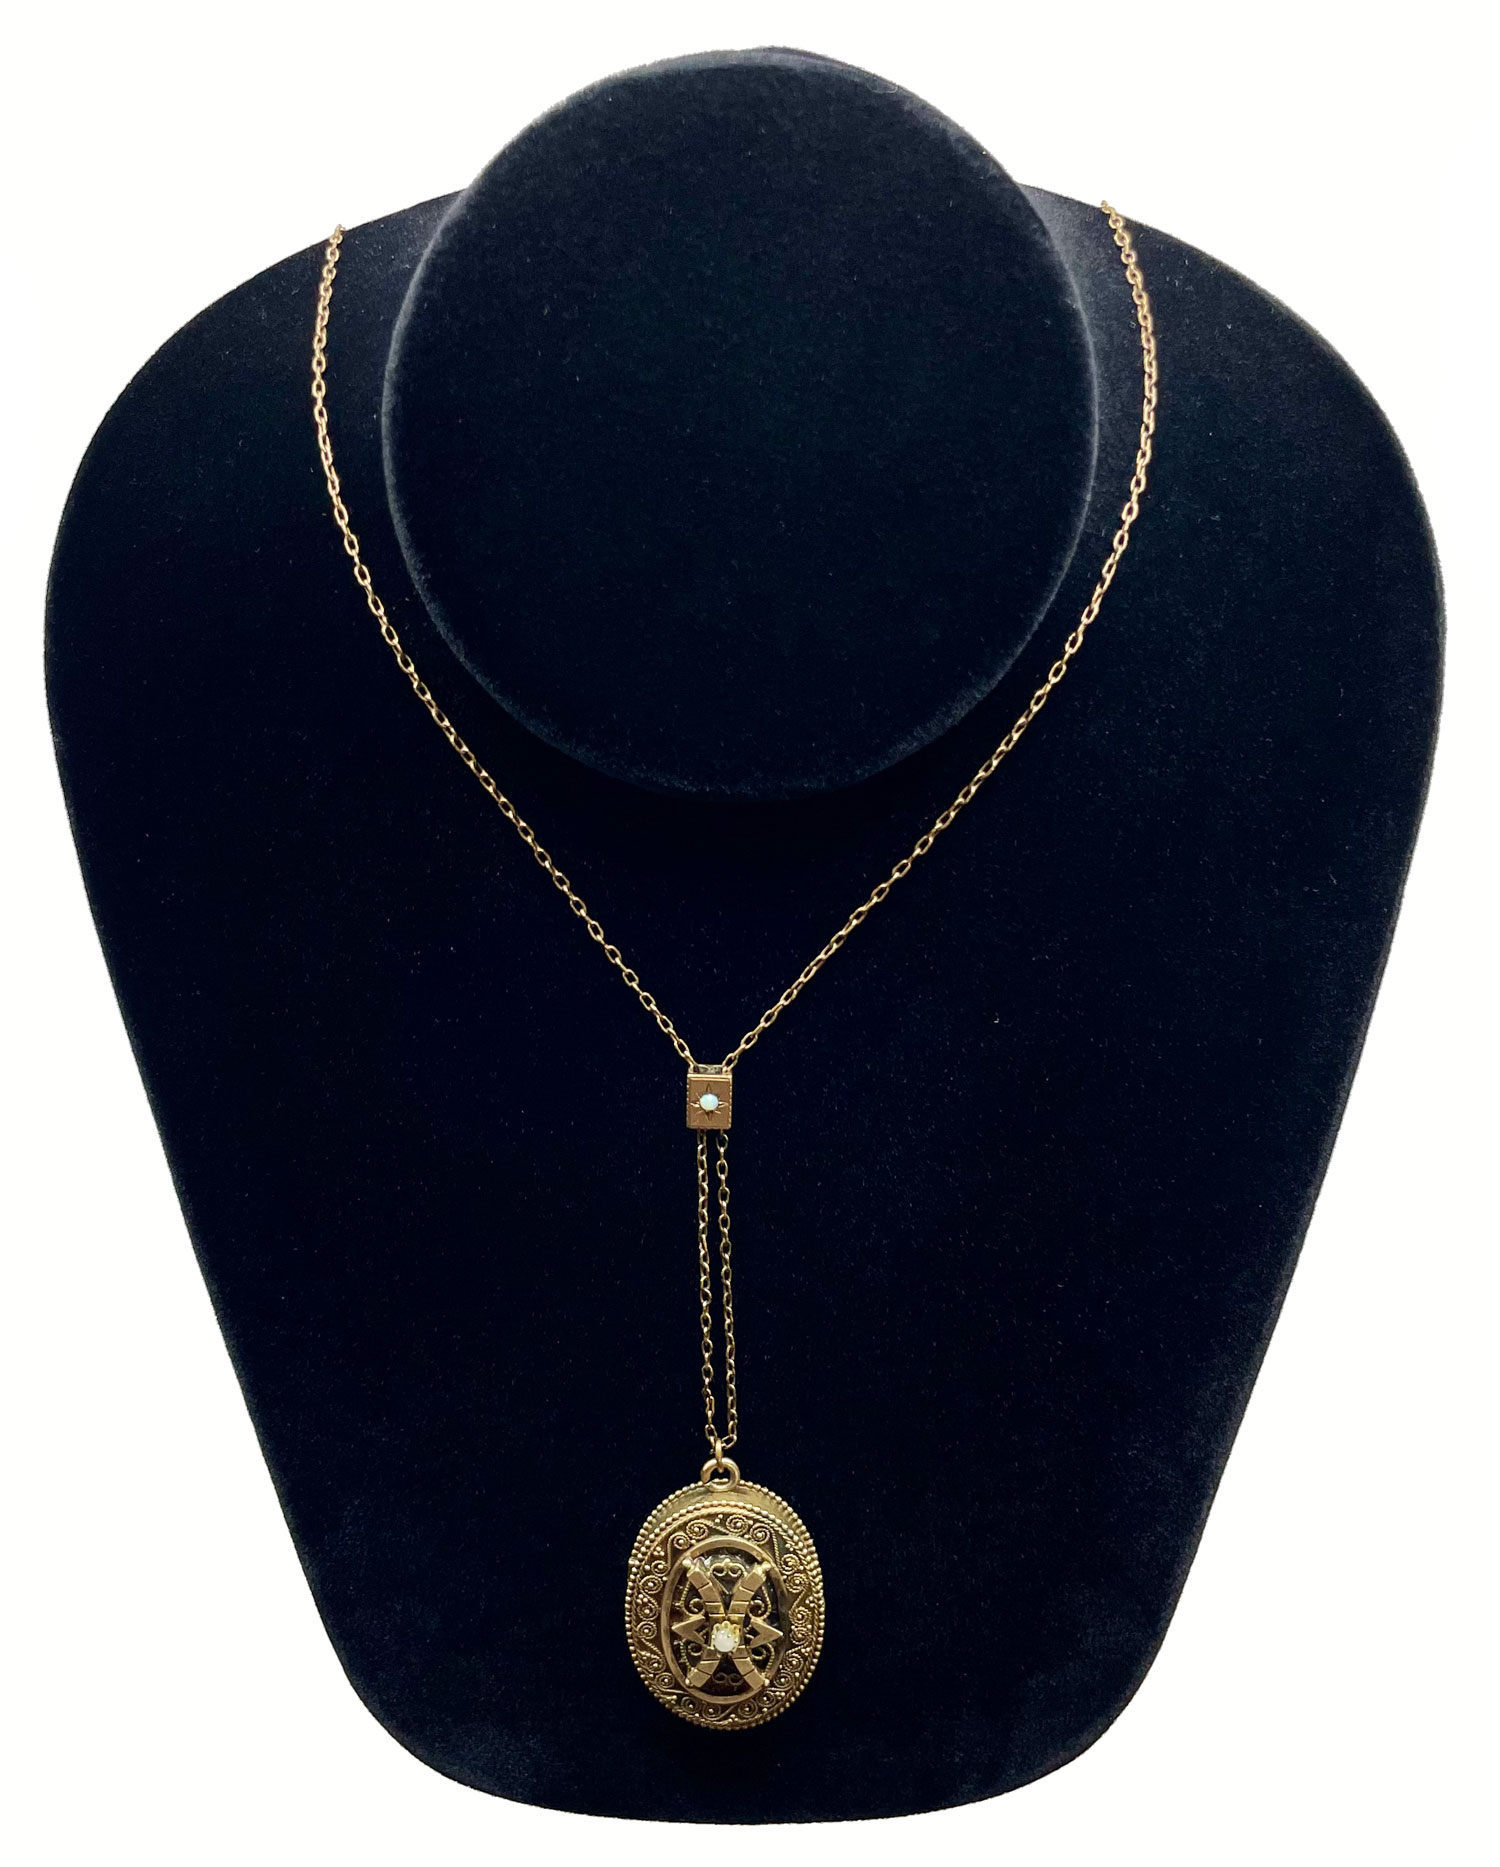 Antique locket pendant necklace